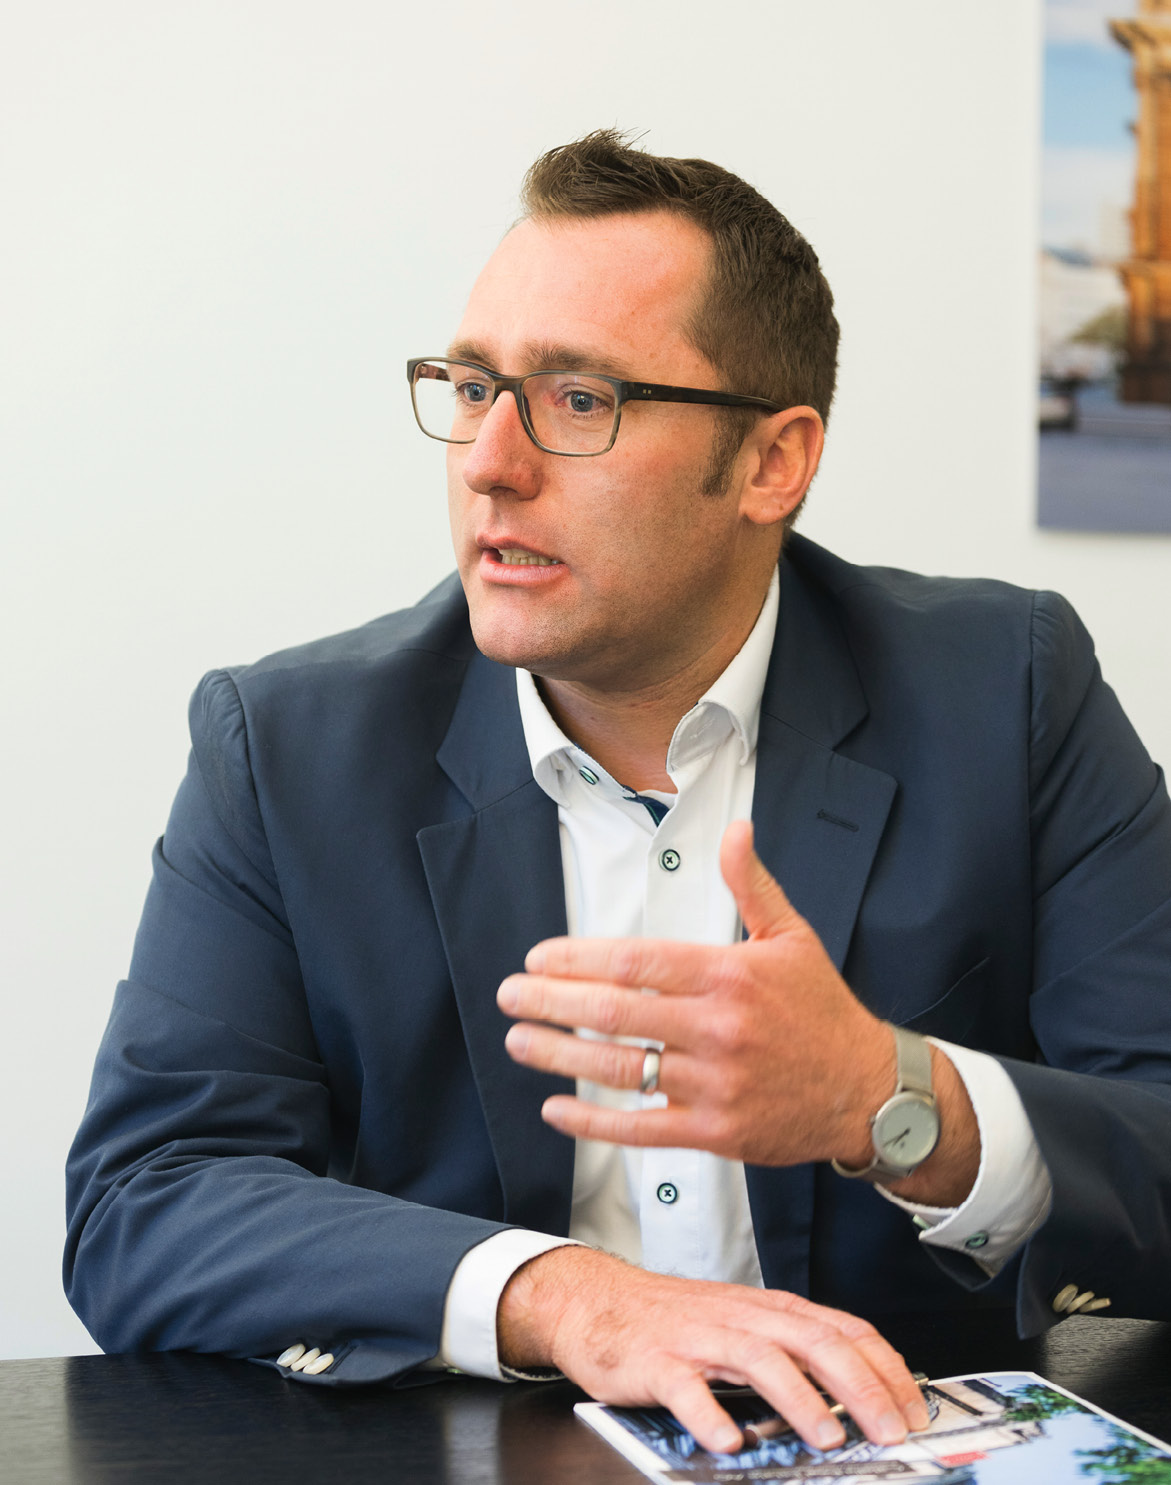 Fondsmanager 2019, DACH, Thomas Kübler, München, Forbes Ranking